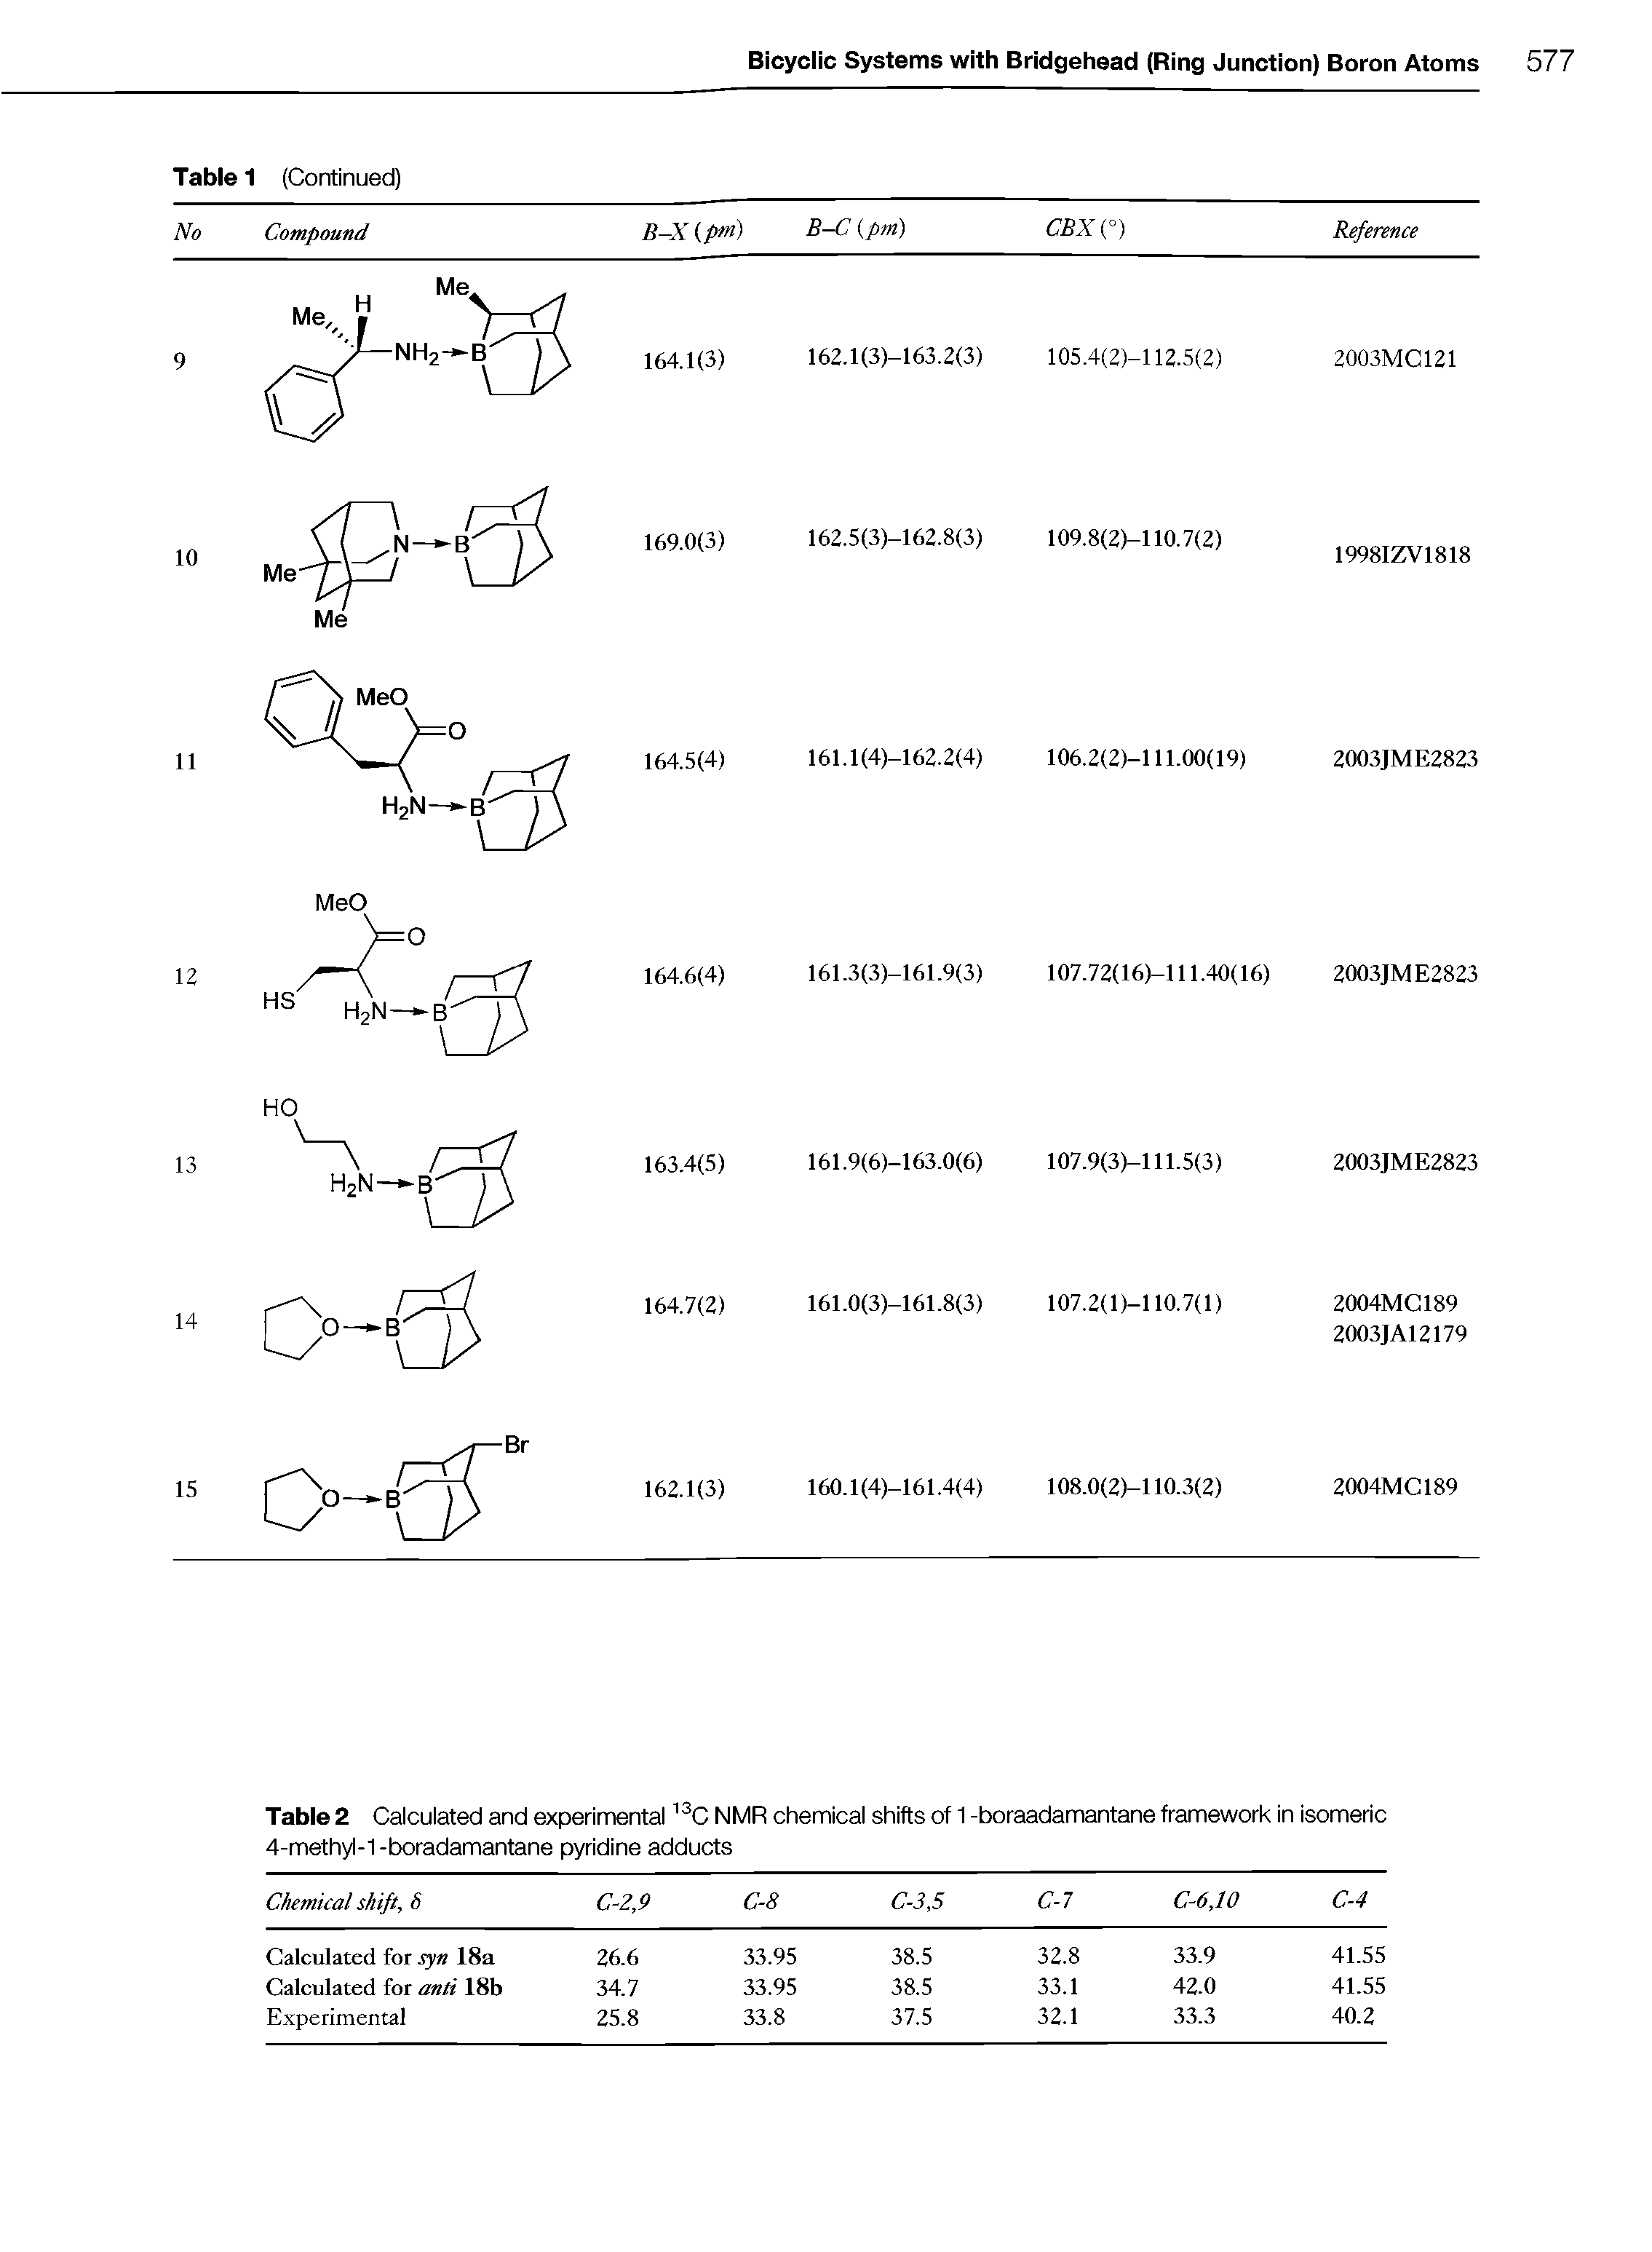 Table 2 Calculated and experimental 13C NMR chemical shifts of 1 -boraadamantane framework in isomeric 4-methyl-1 -boradamantane pyridine adducts...